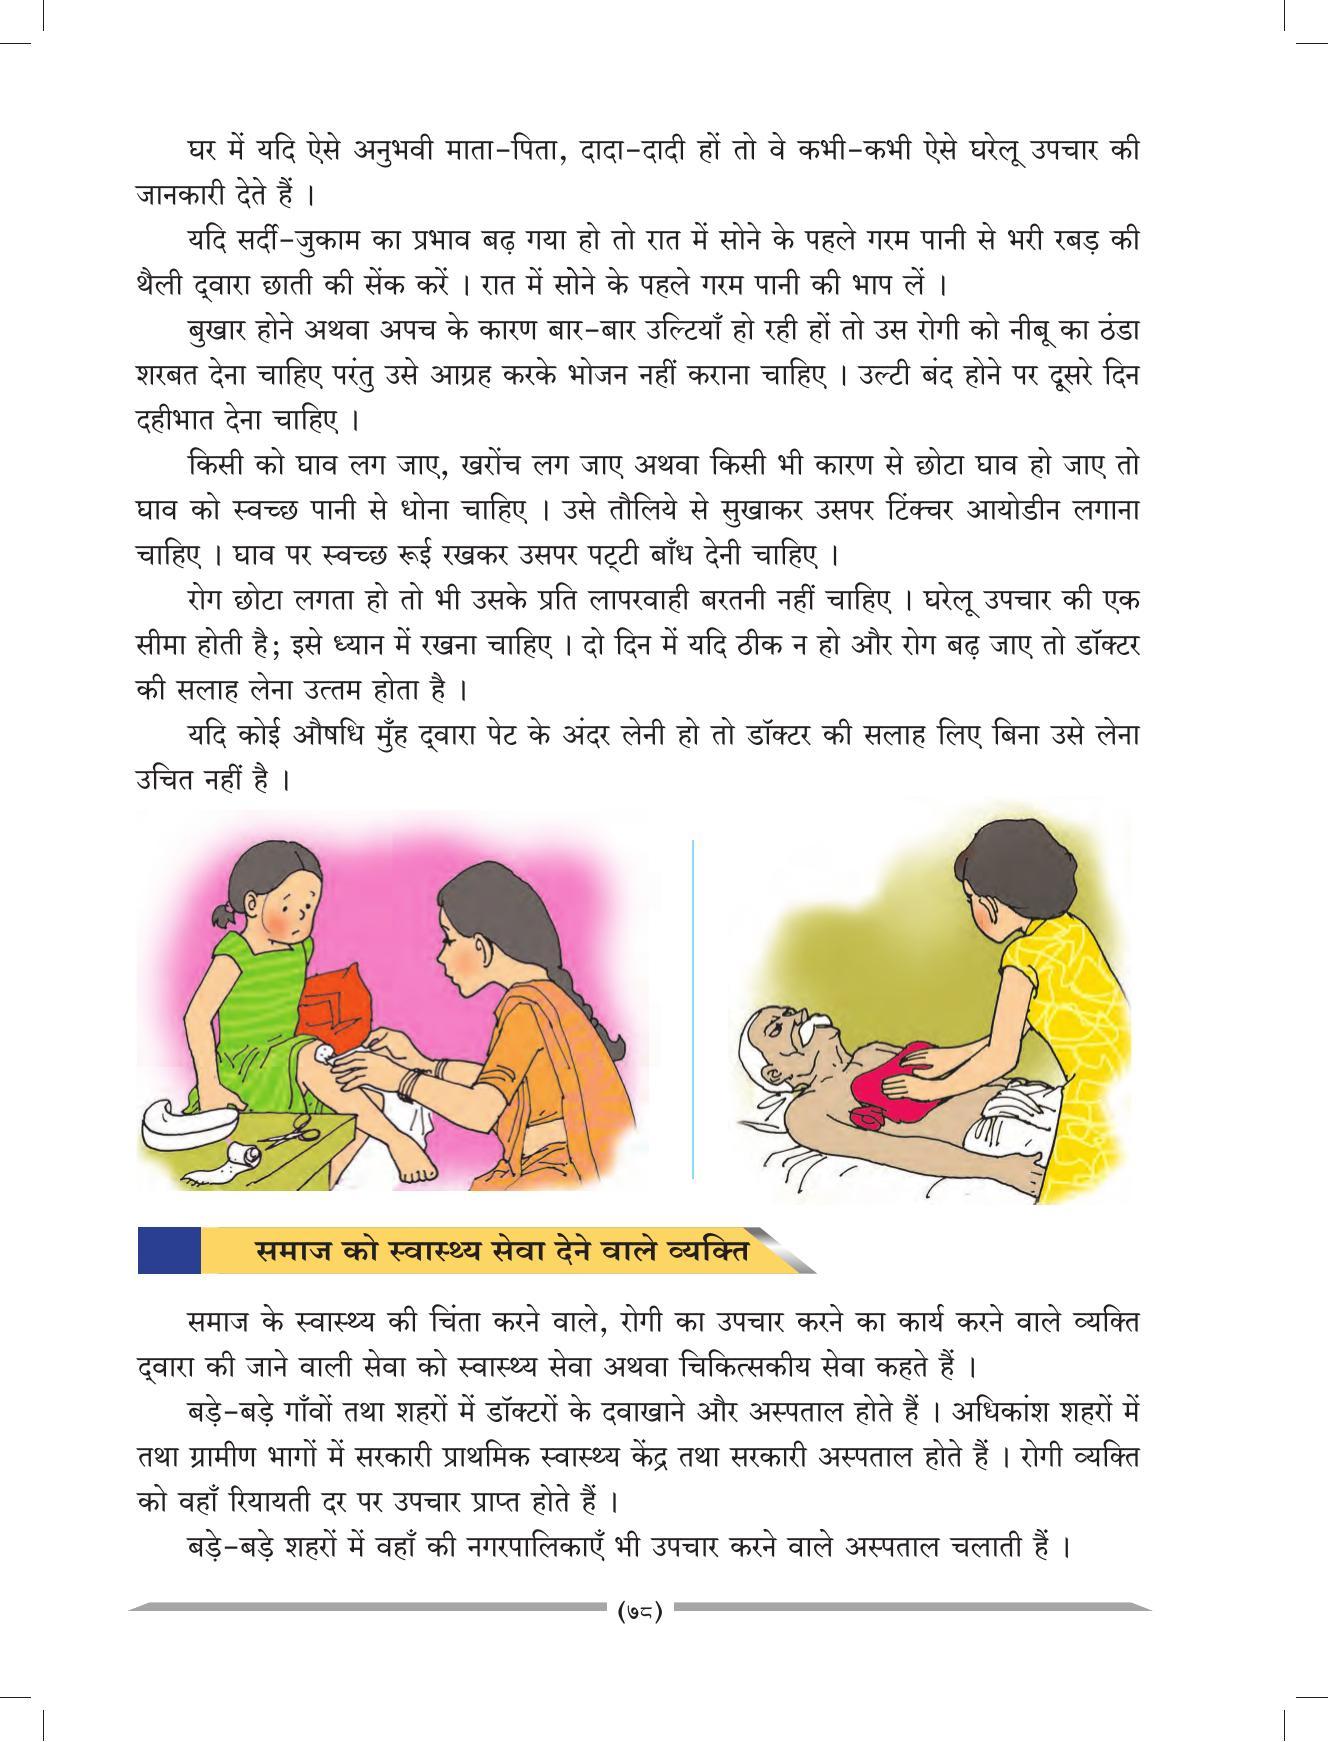 Maharashtra Board Class 4 EVS 1 (Hindi Medium) Textbook - Page 88